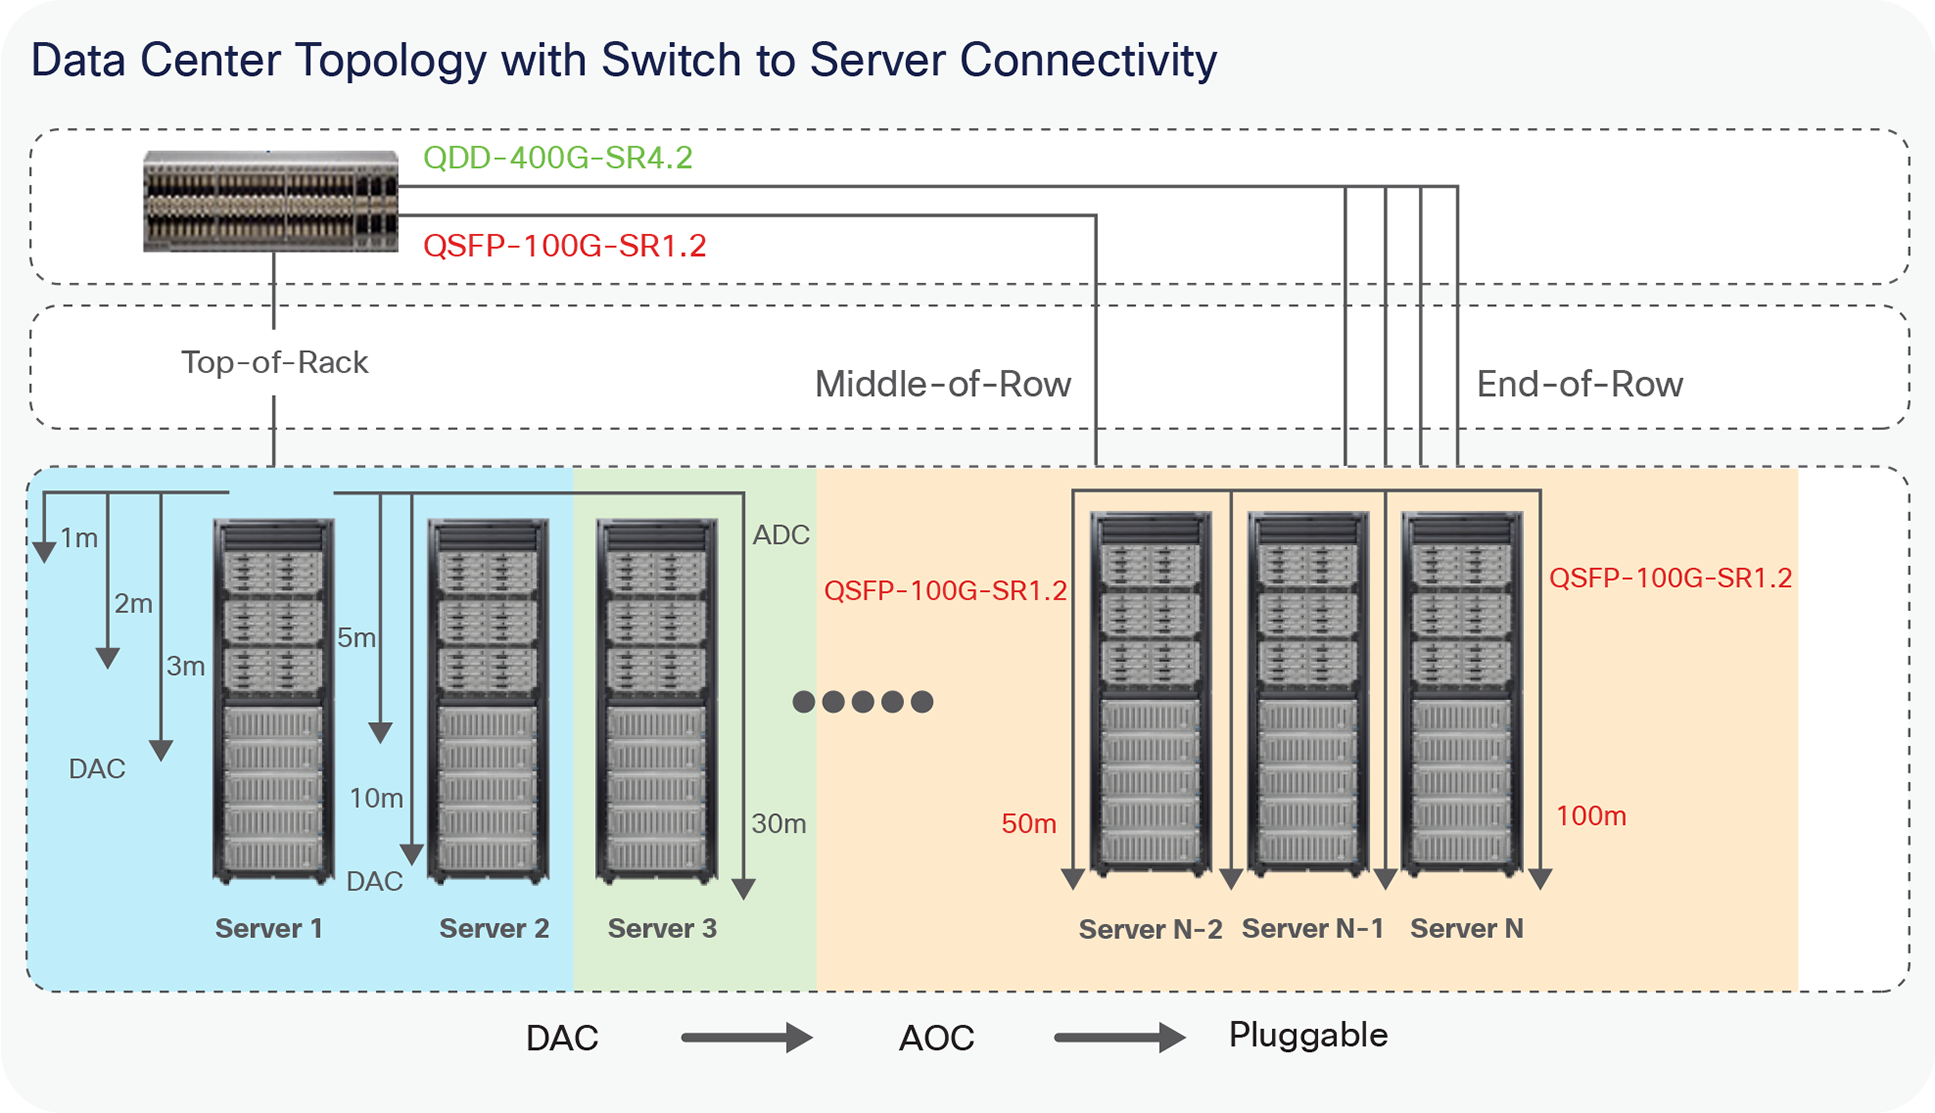 Switch to server connectivity using QSFP-100G-SR1.2 optics